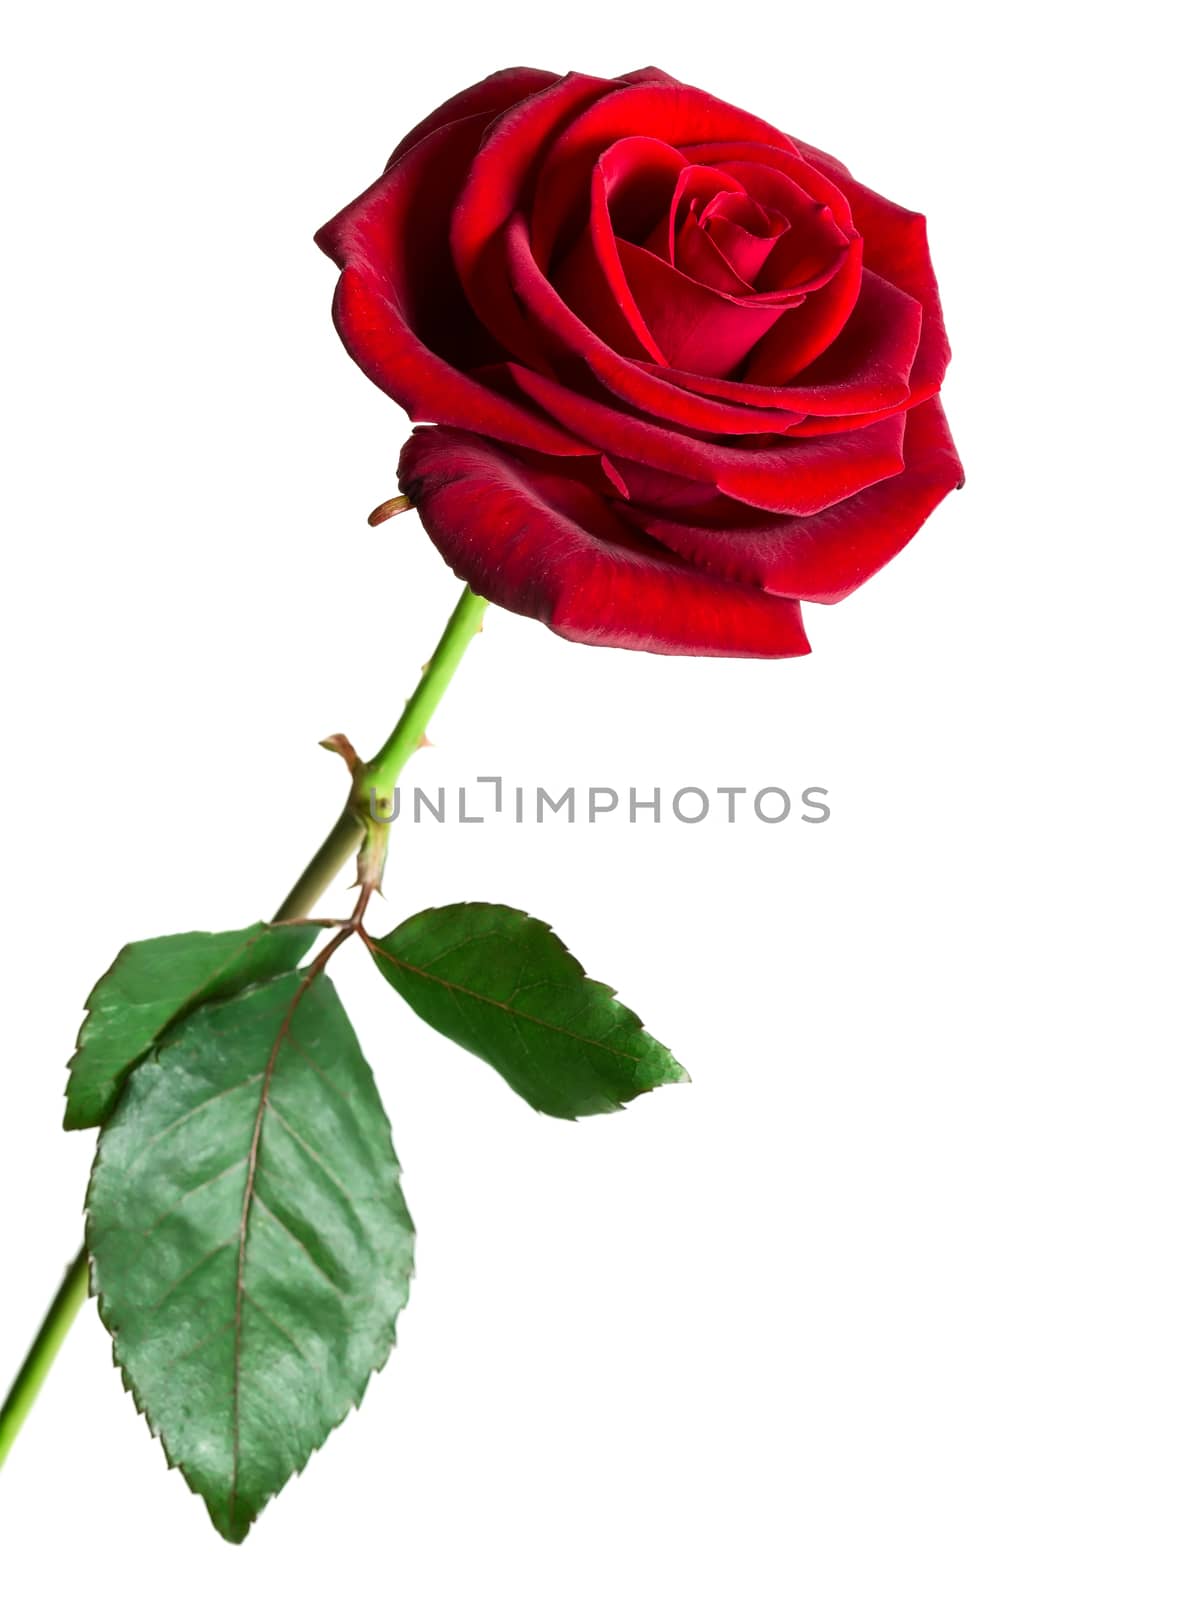 Red rose by Valengilda